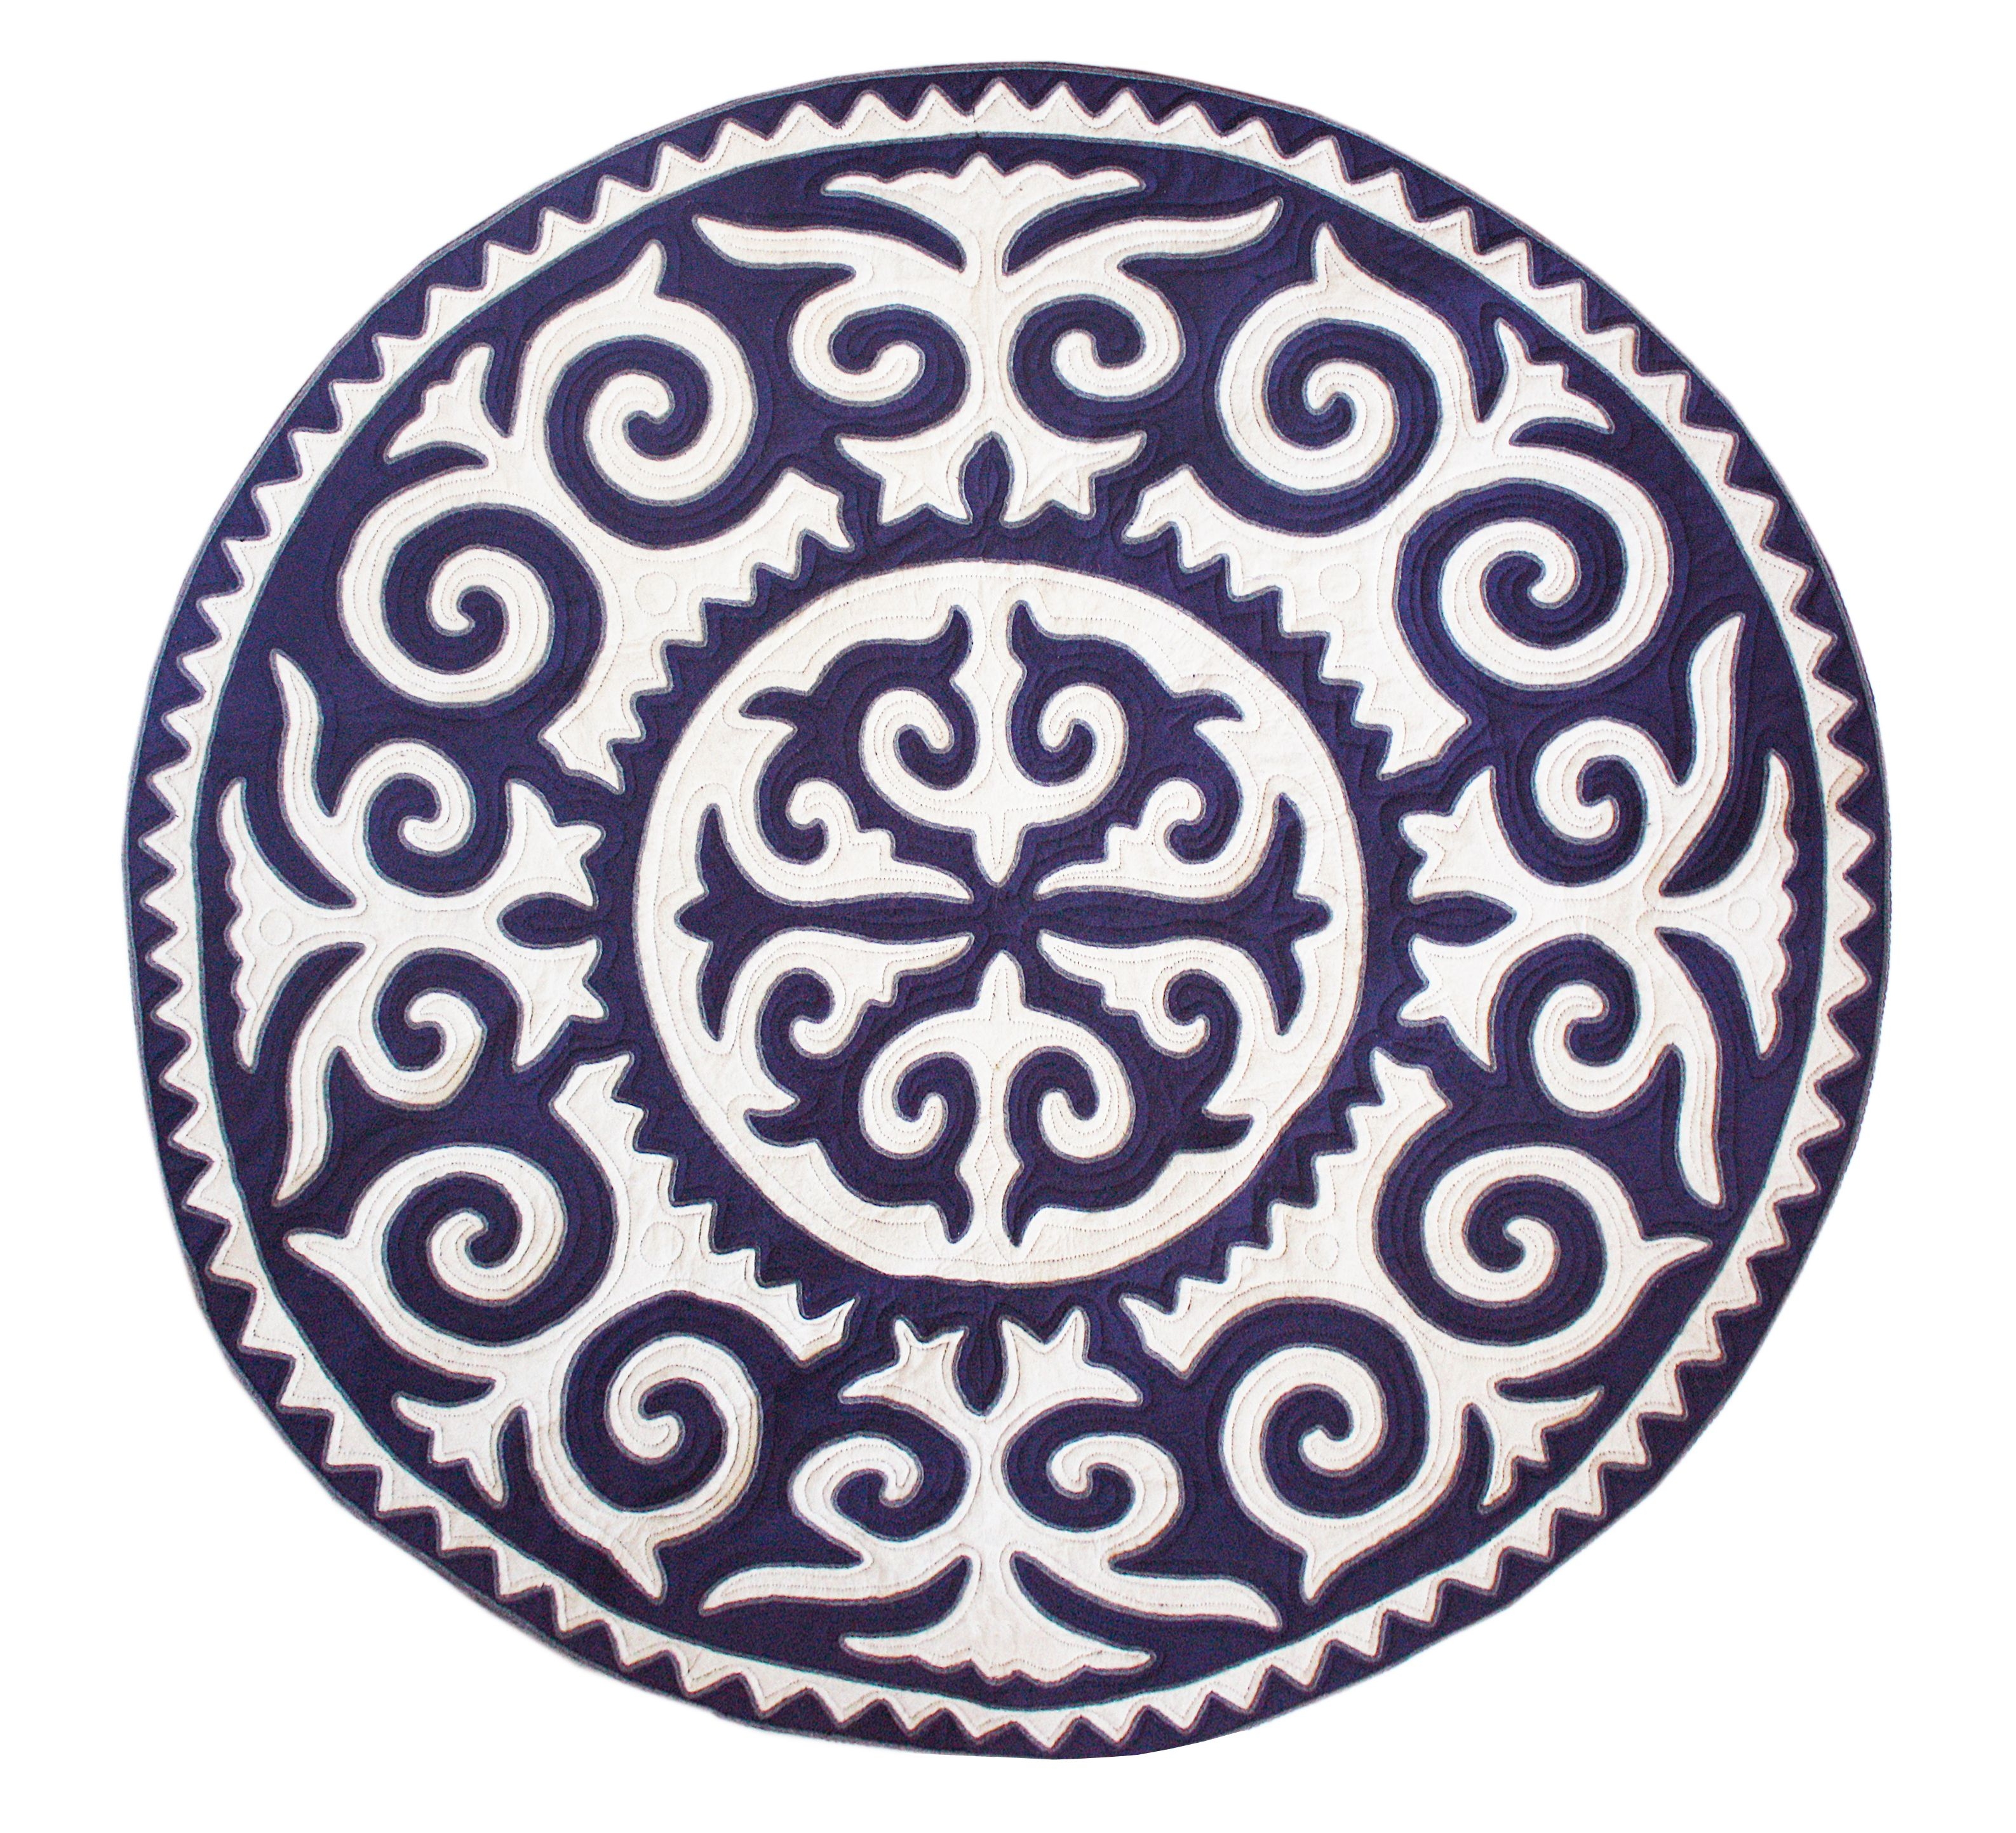 Кыргызский орнамент круг